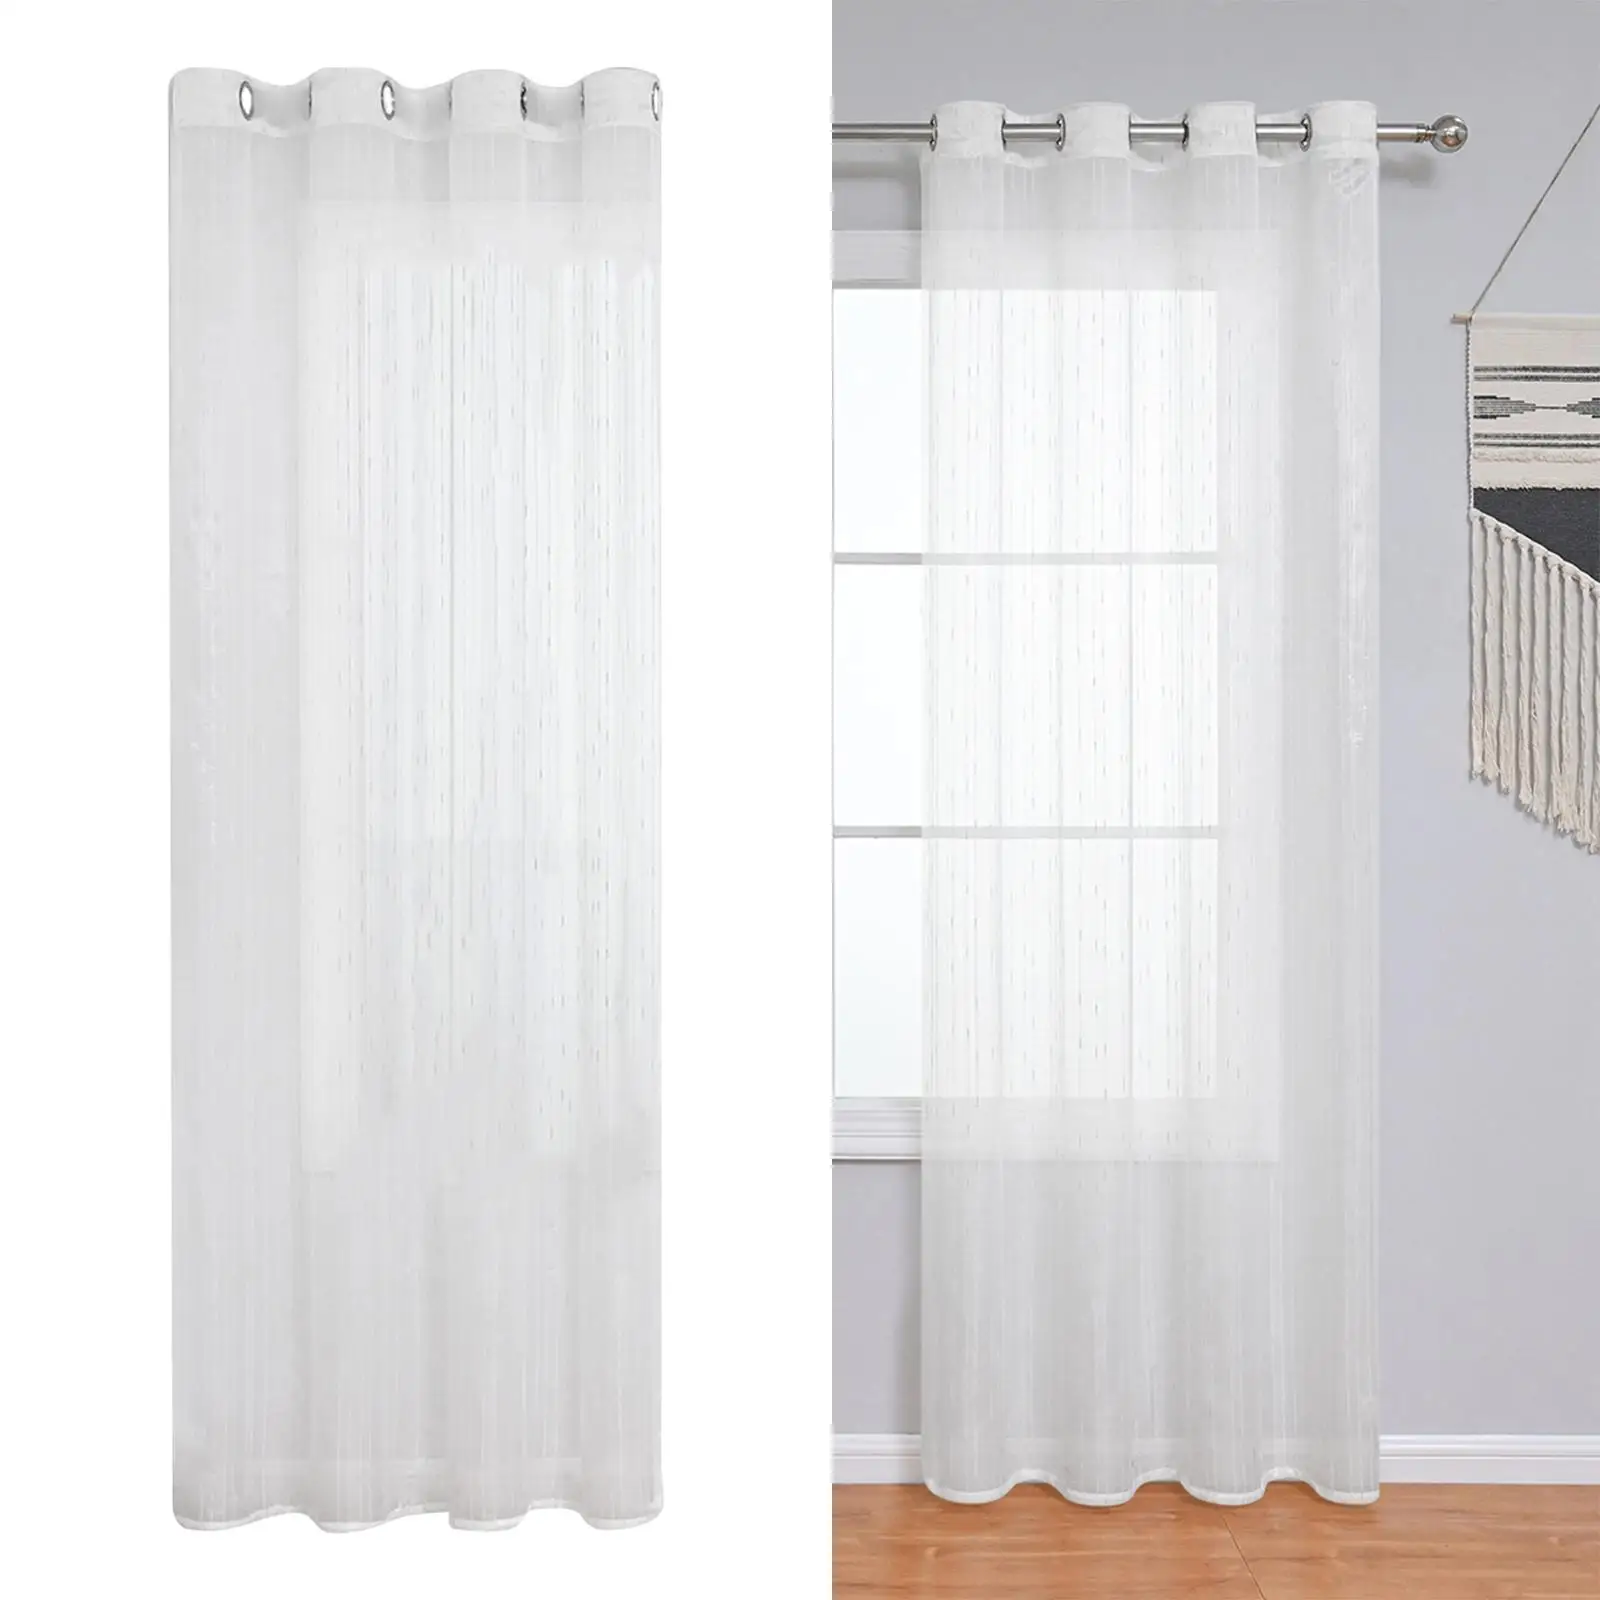 Grommet Top White Curtain Semi Sheer Curtain 55x102inch Accessory Elegant